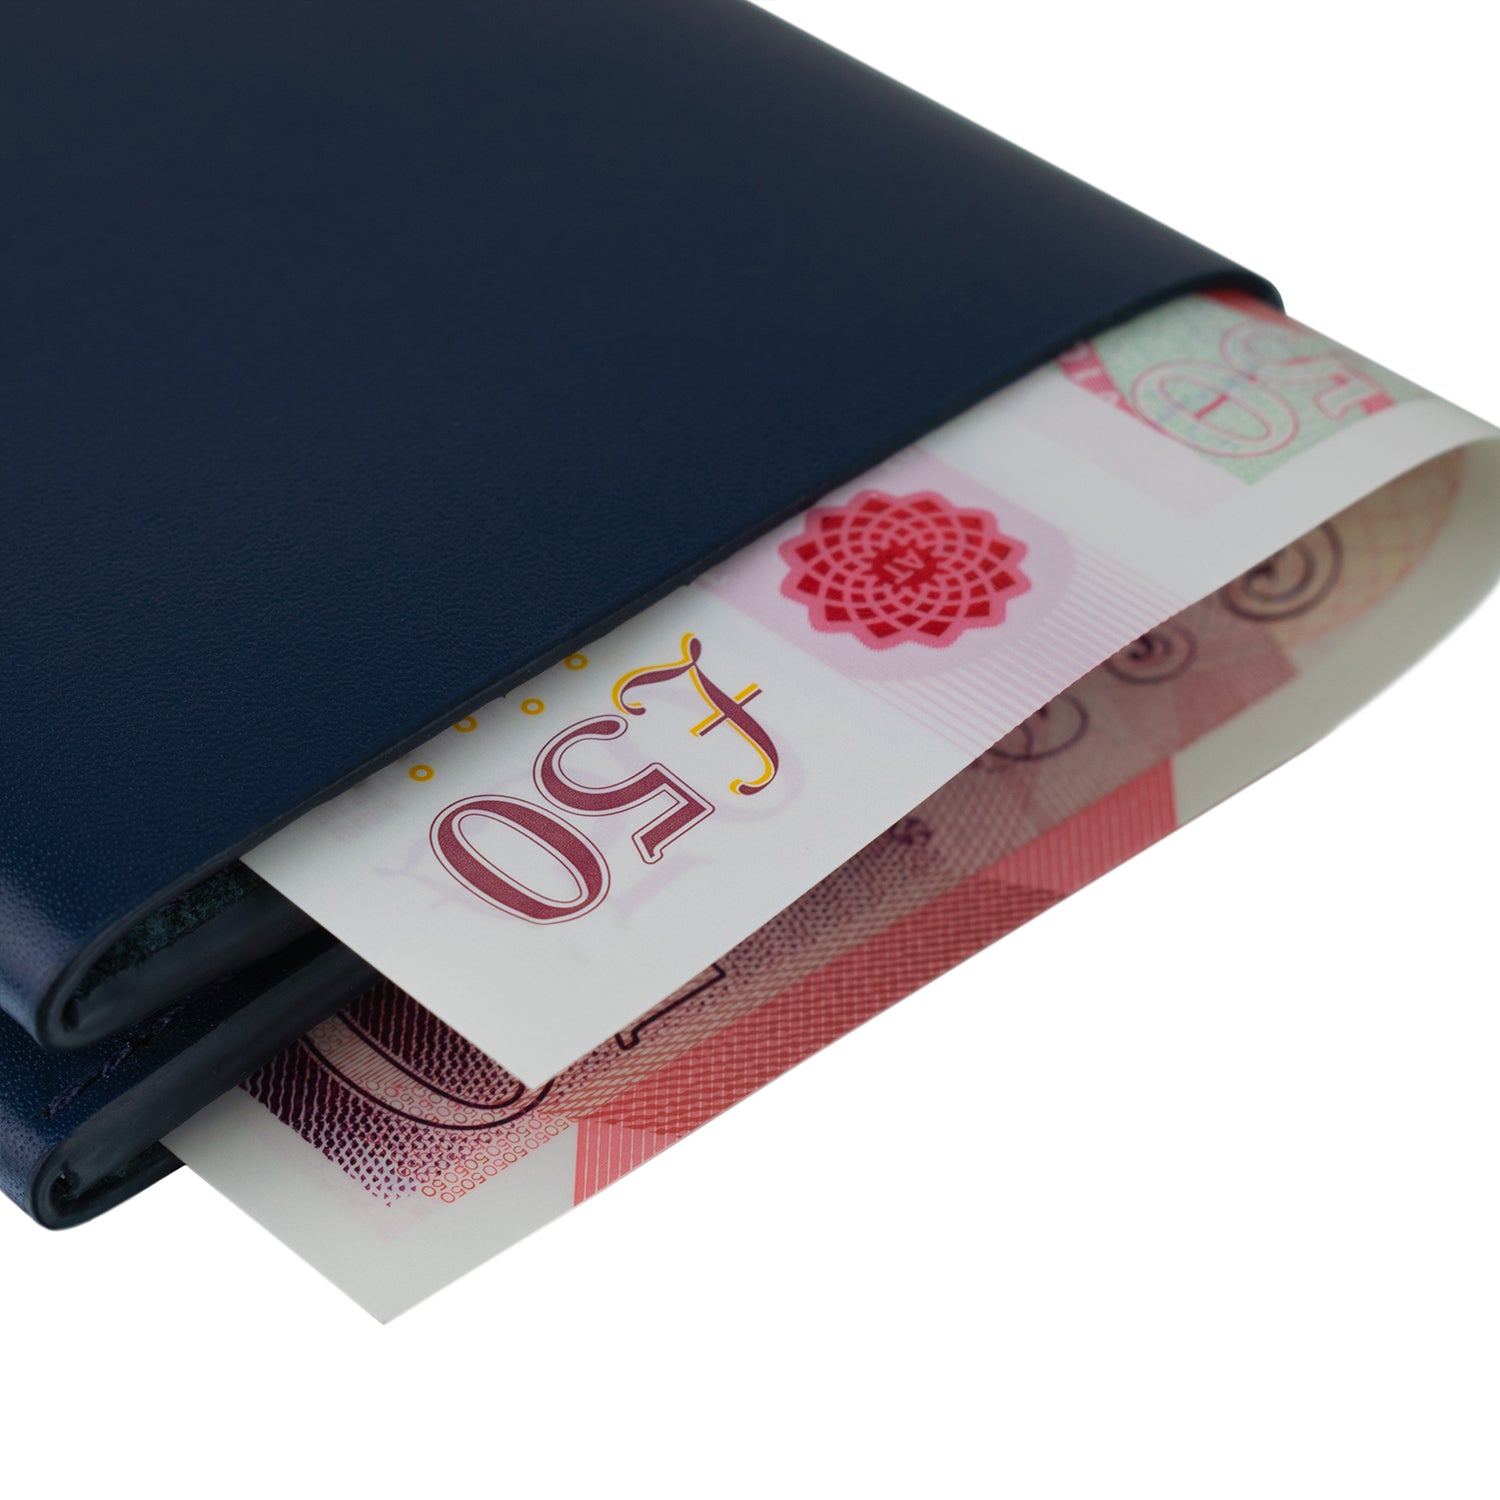 Bifold Wallet in Navy Blue